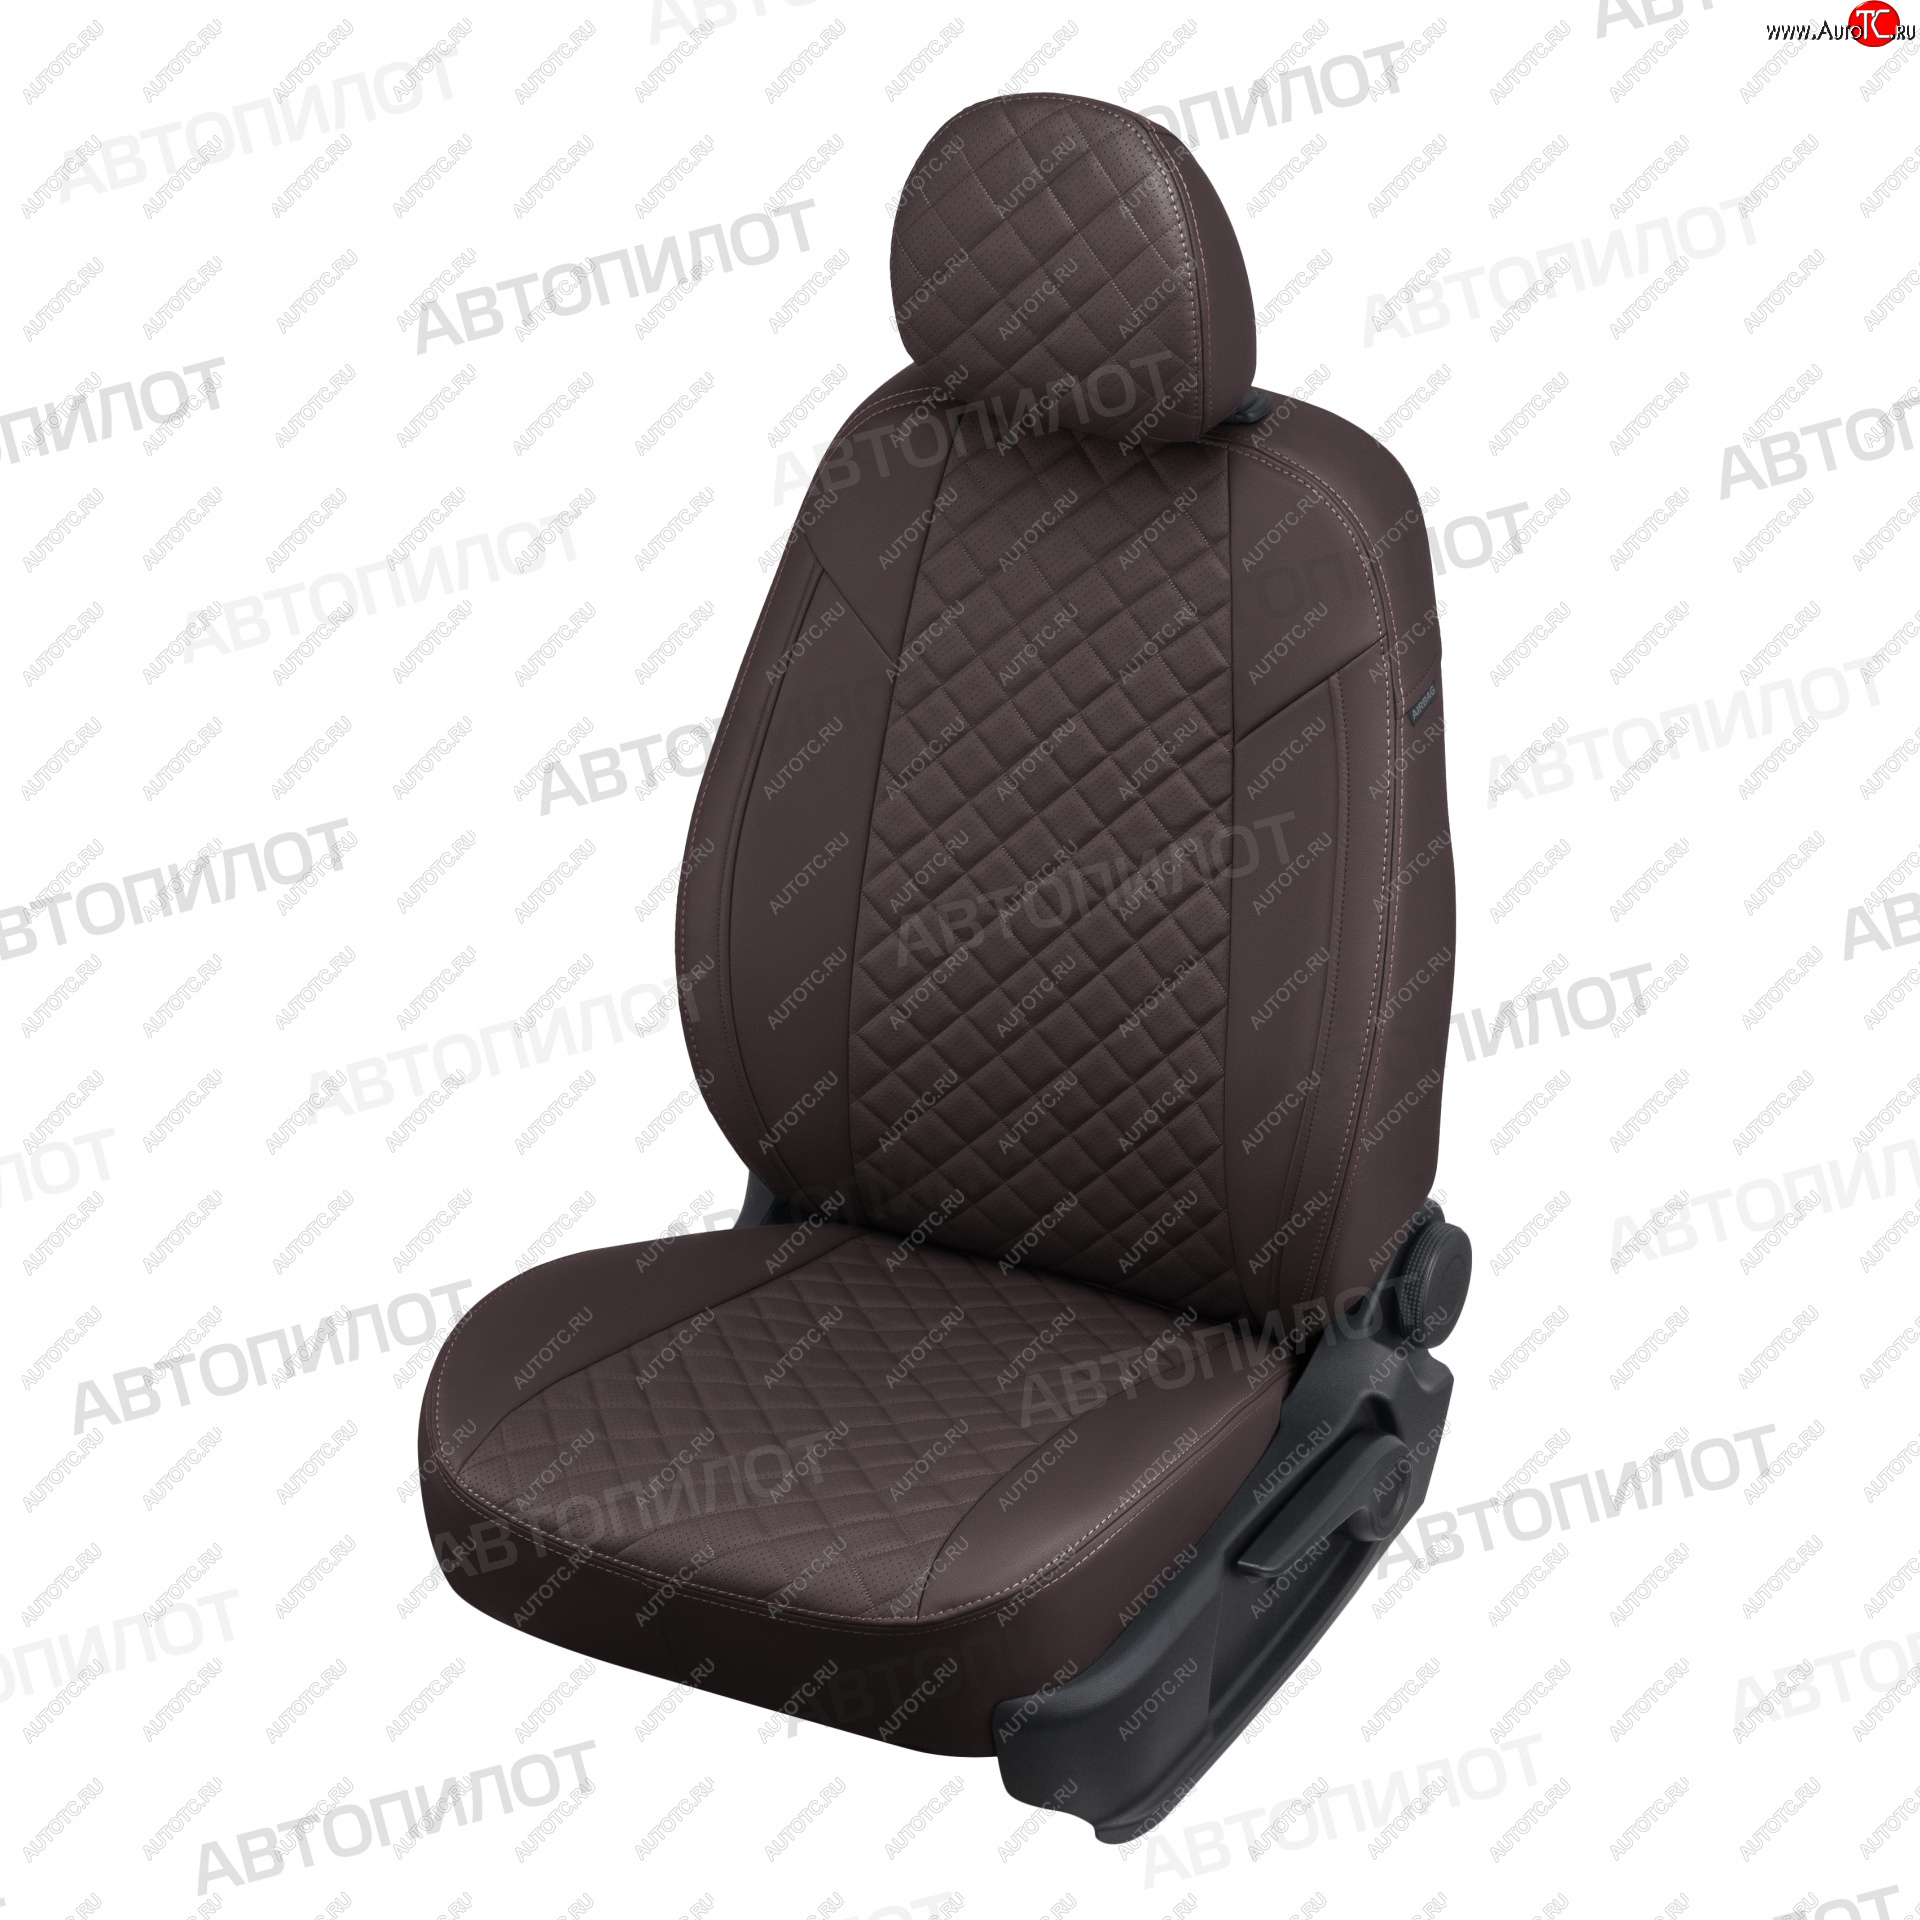 14 499 р. Чехлы сидений (Titanium, экокожа) Автопилот Ромб  Ford Kuga  1 (2008-2013) (шоколад)